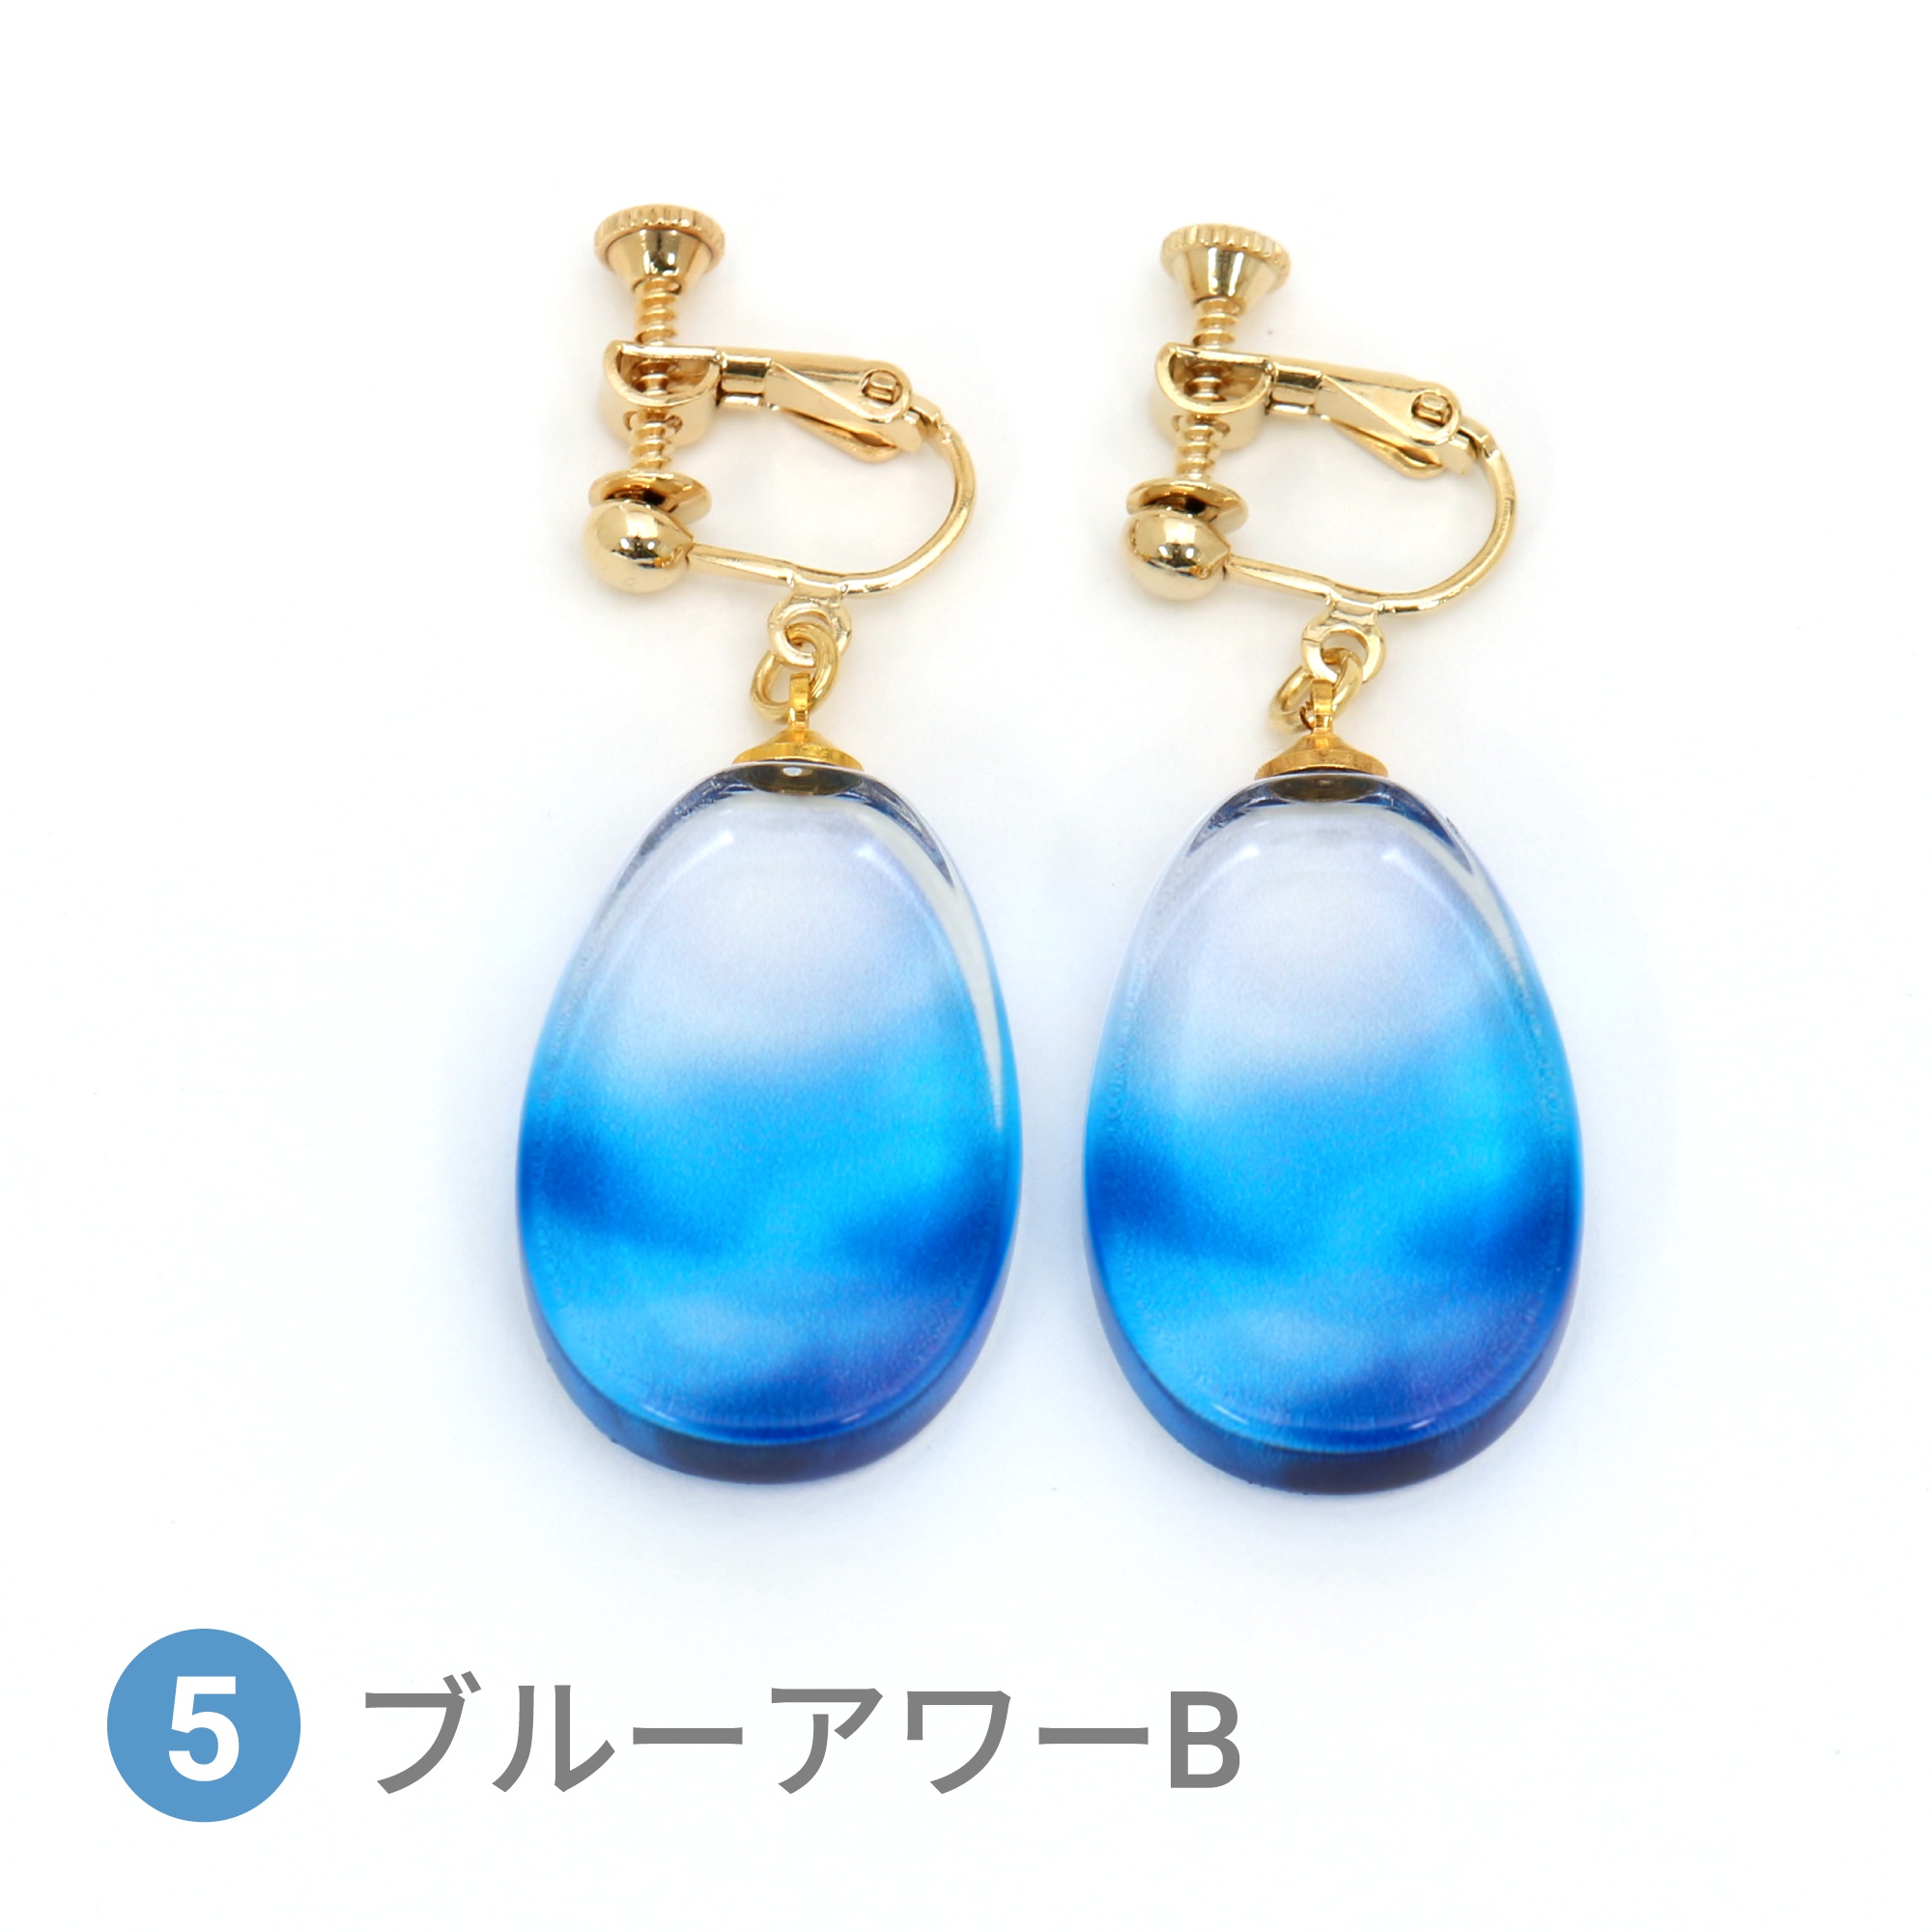 Glass accessories Earring SKY COLOR blue hour B drop shape